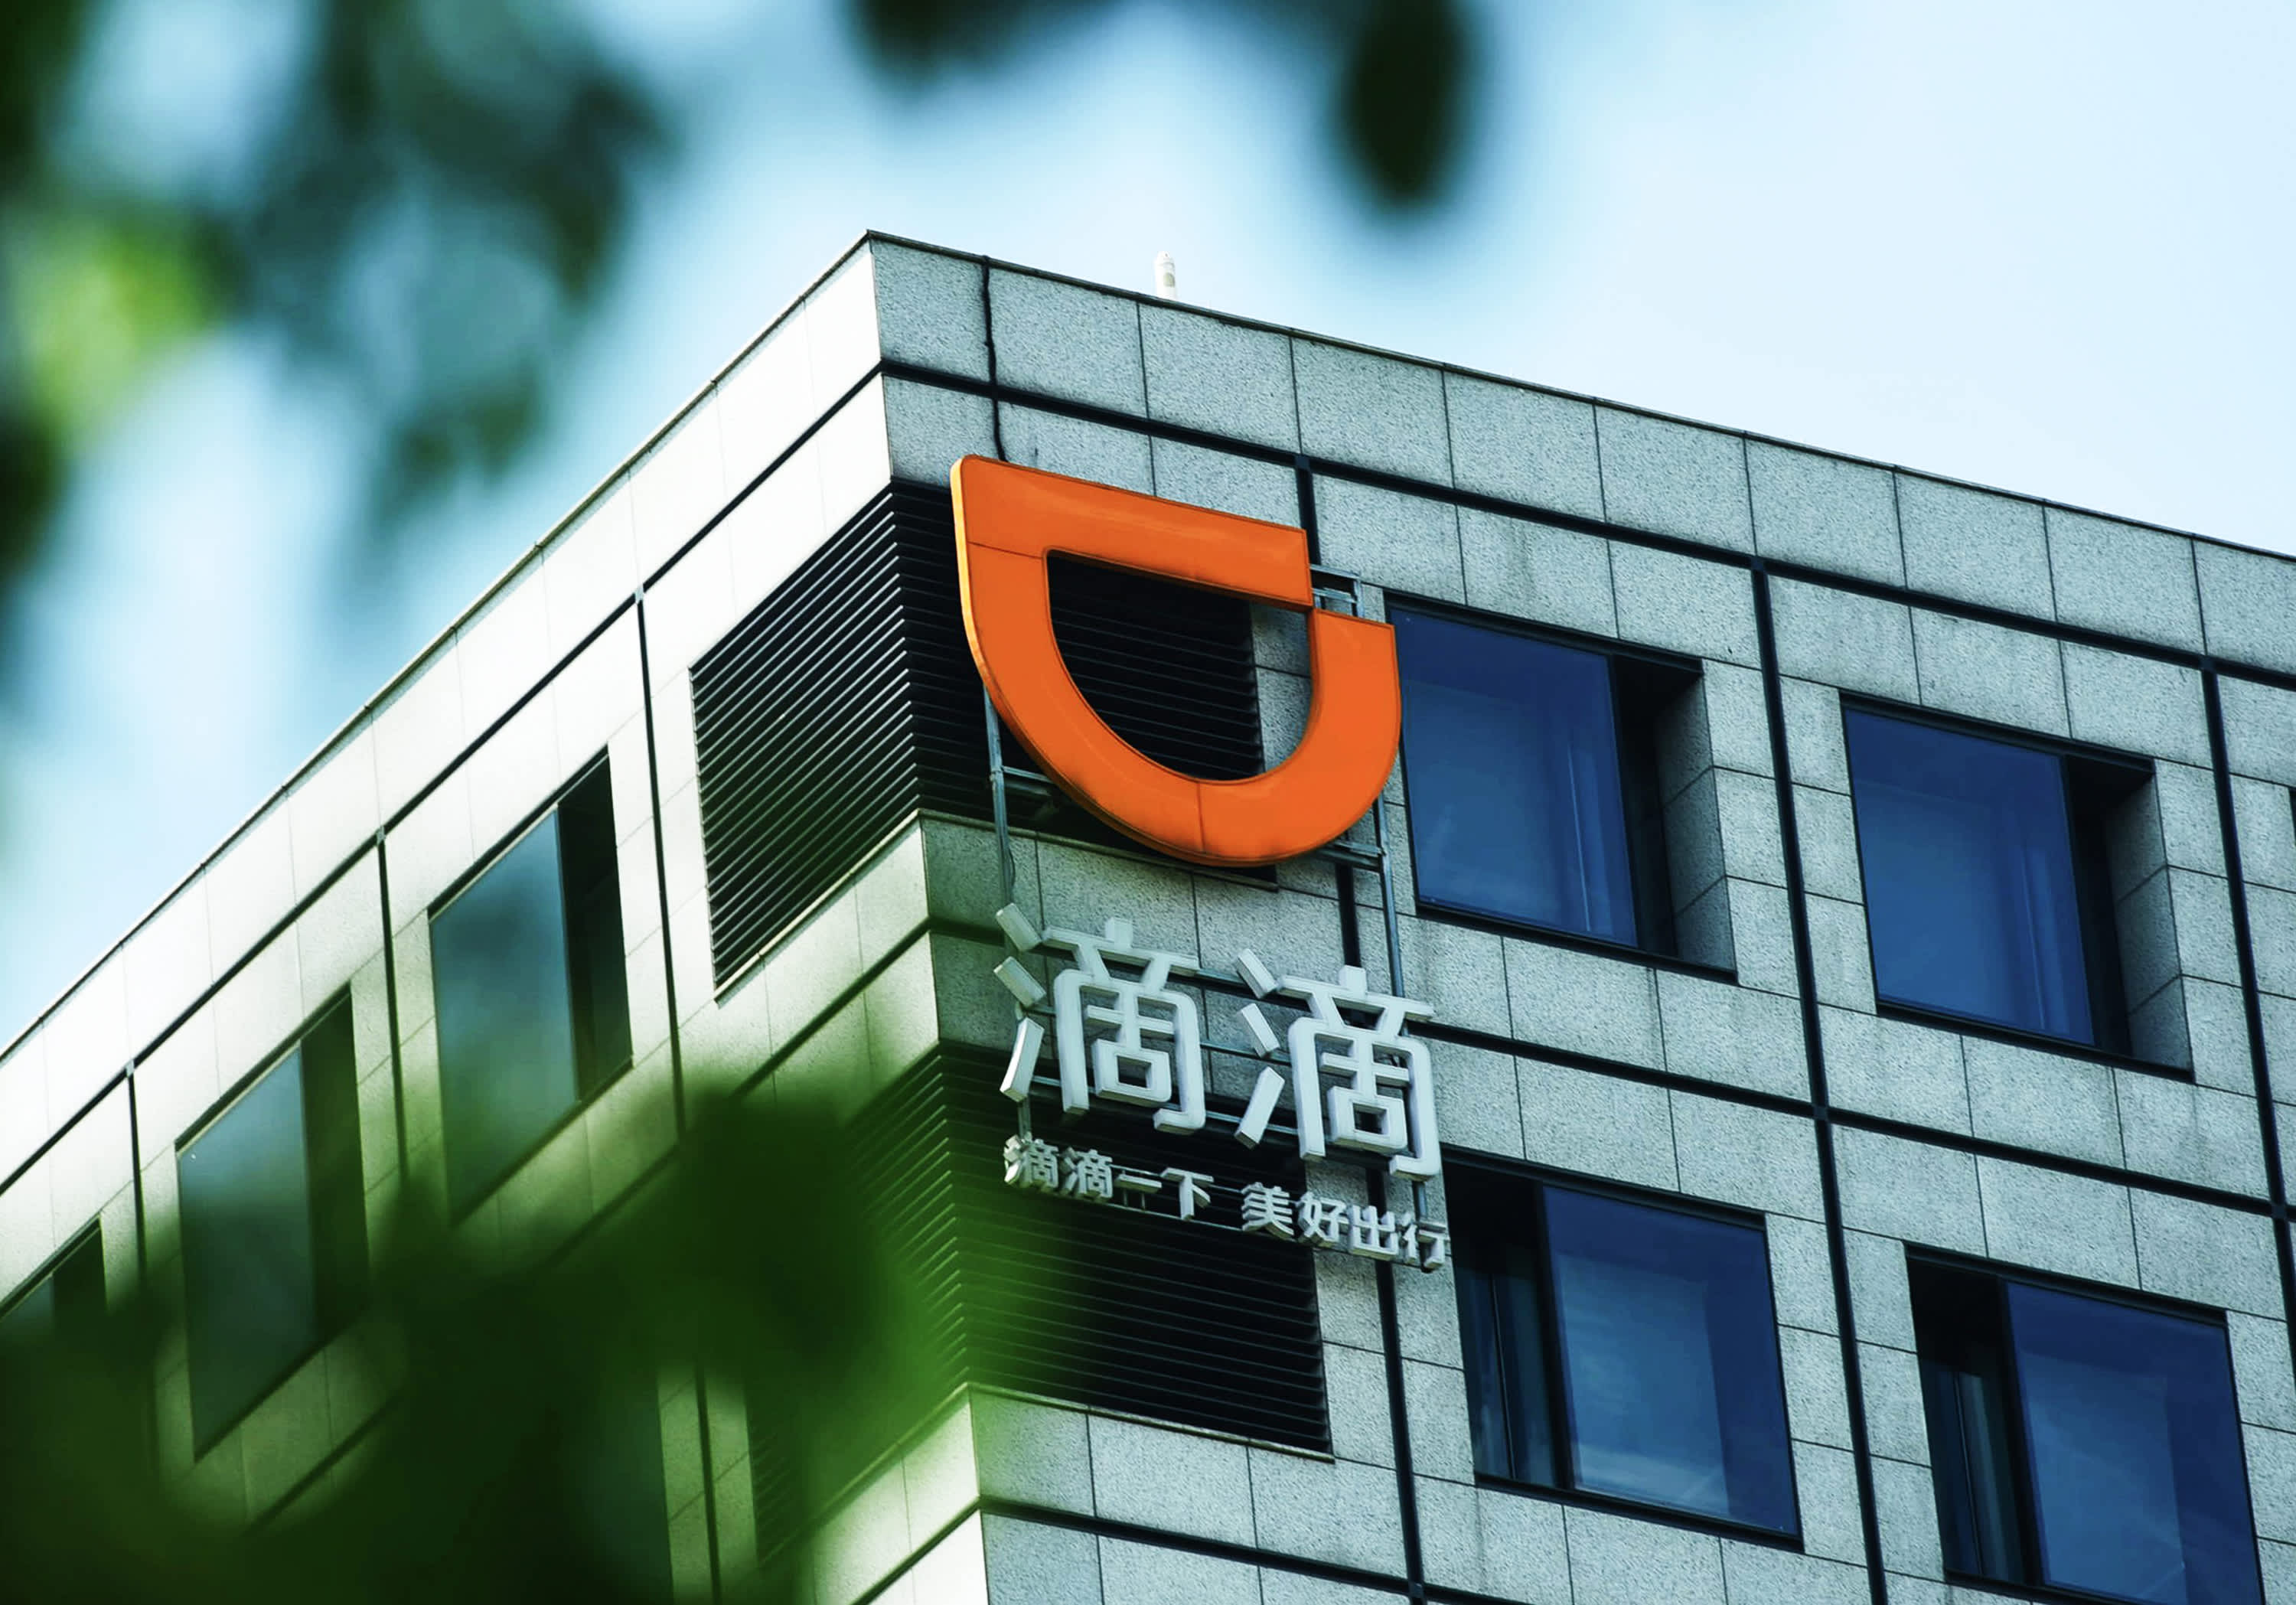 Didi Chuxing raises $ 1.5 billion in debt ahead of IPO: Reports